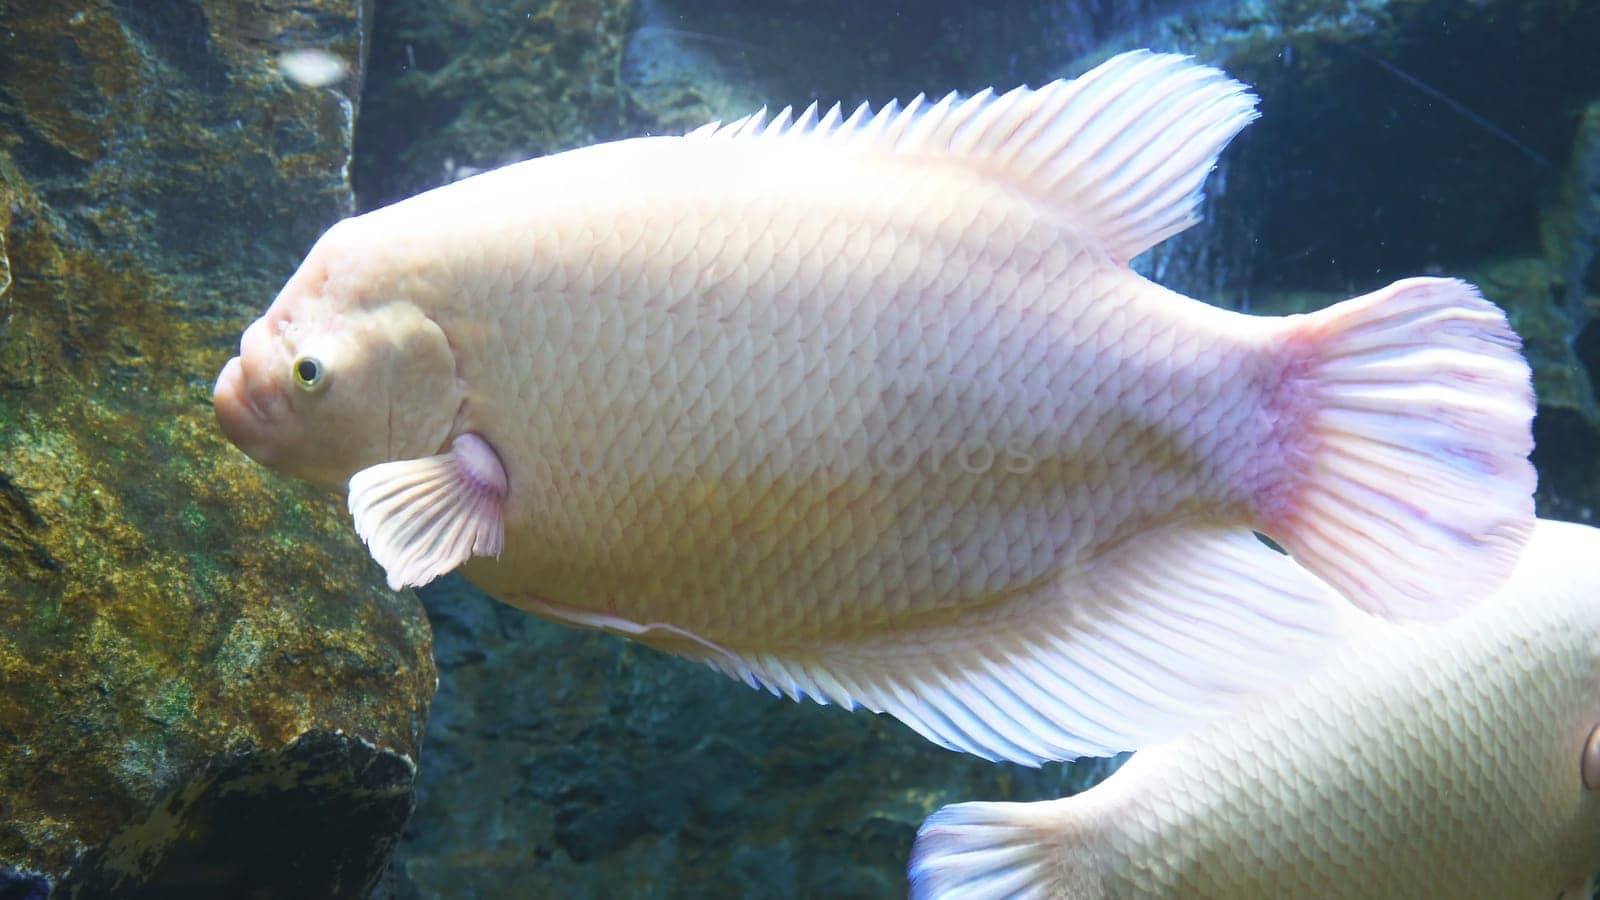 Giant gourami fish in aquarium tank  by stoonn